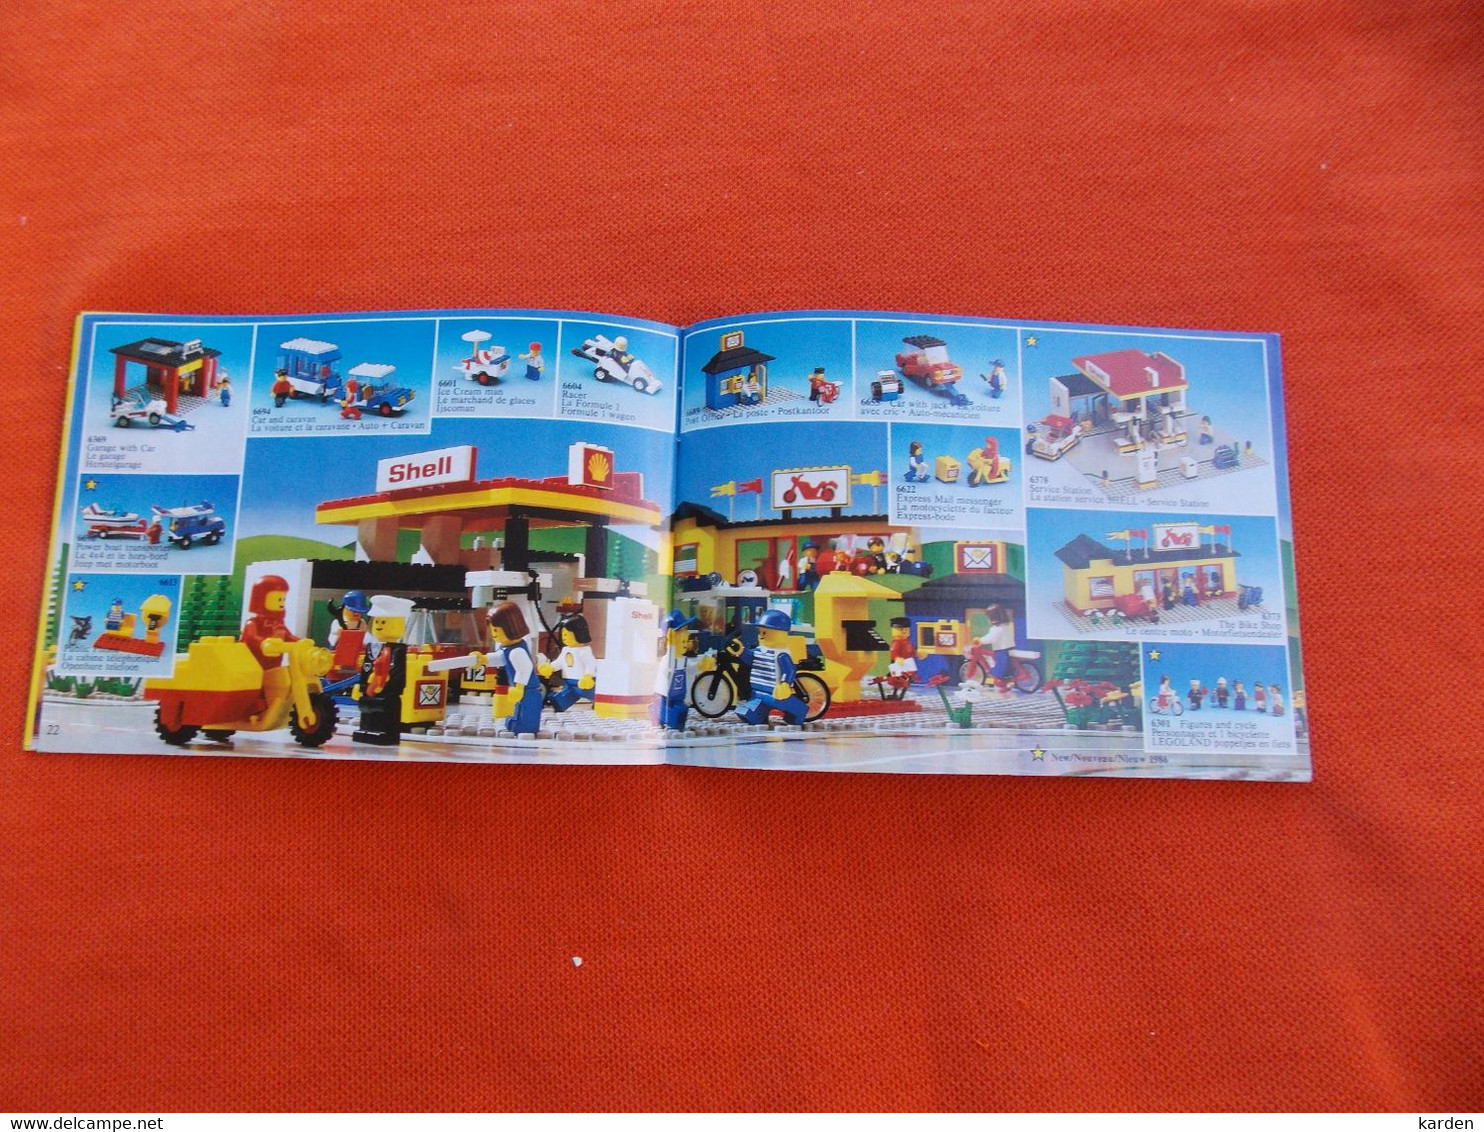 Lego catalogus  Legoland 114578 / 114678 jaren '80